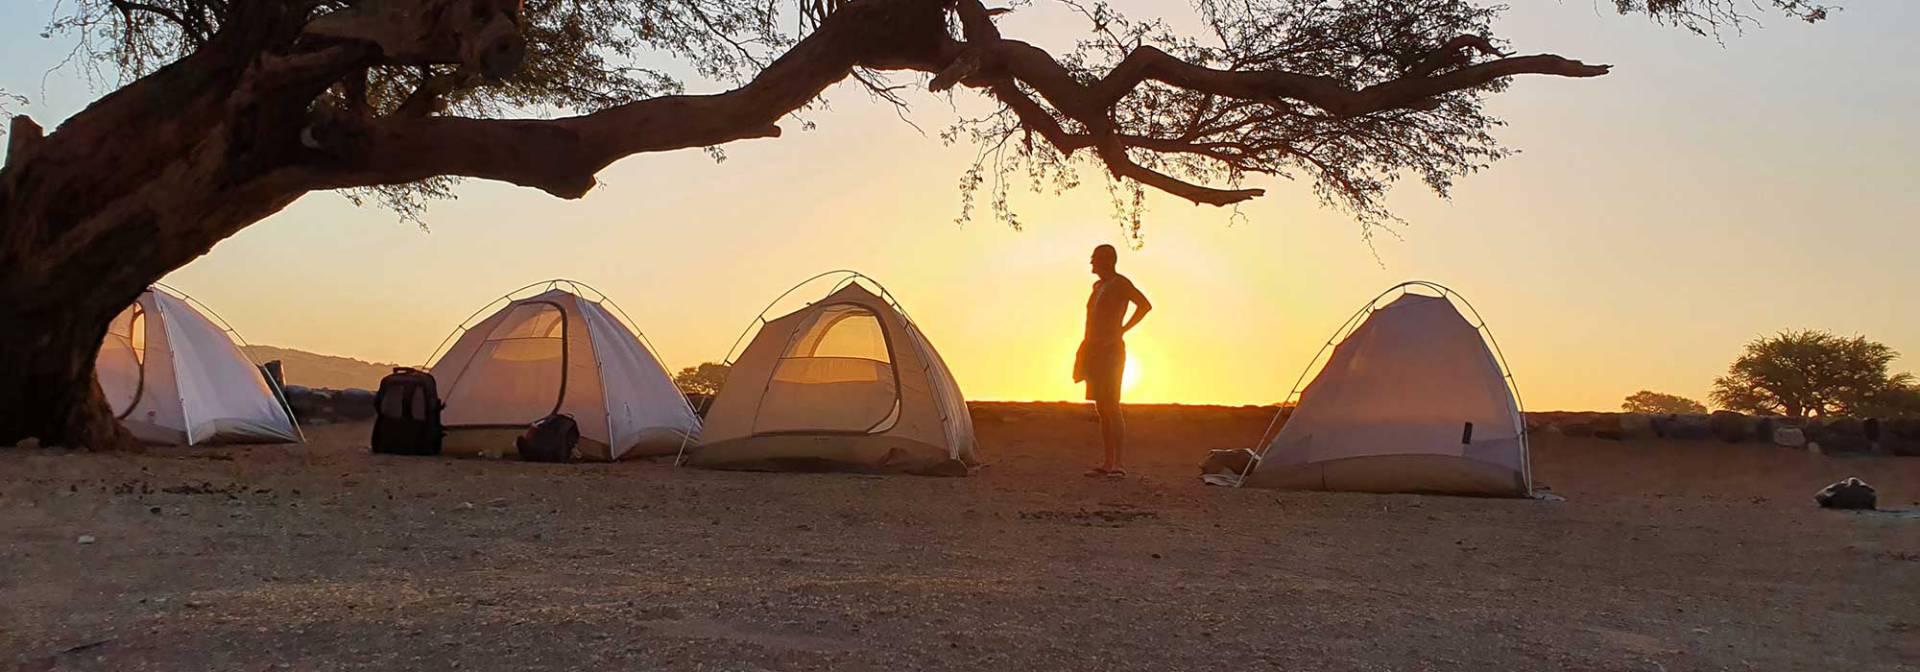 Namibia Campsite im Sonnenuntergang